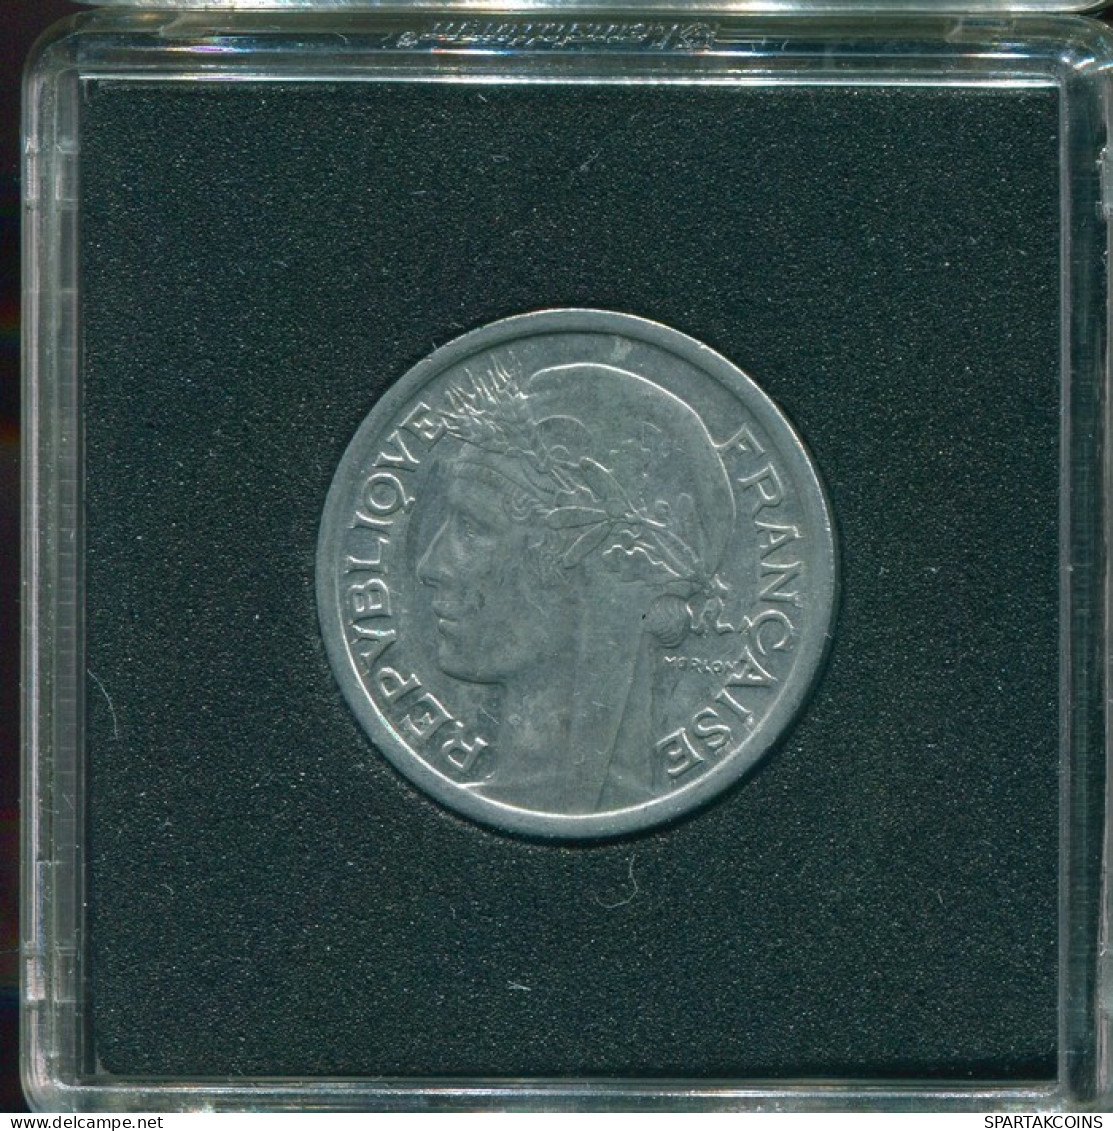 1 FRANC 1945 FRANKREICH FRANCE Französisch Münze XF+ #FR1147.12.D - 1 Franc